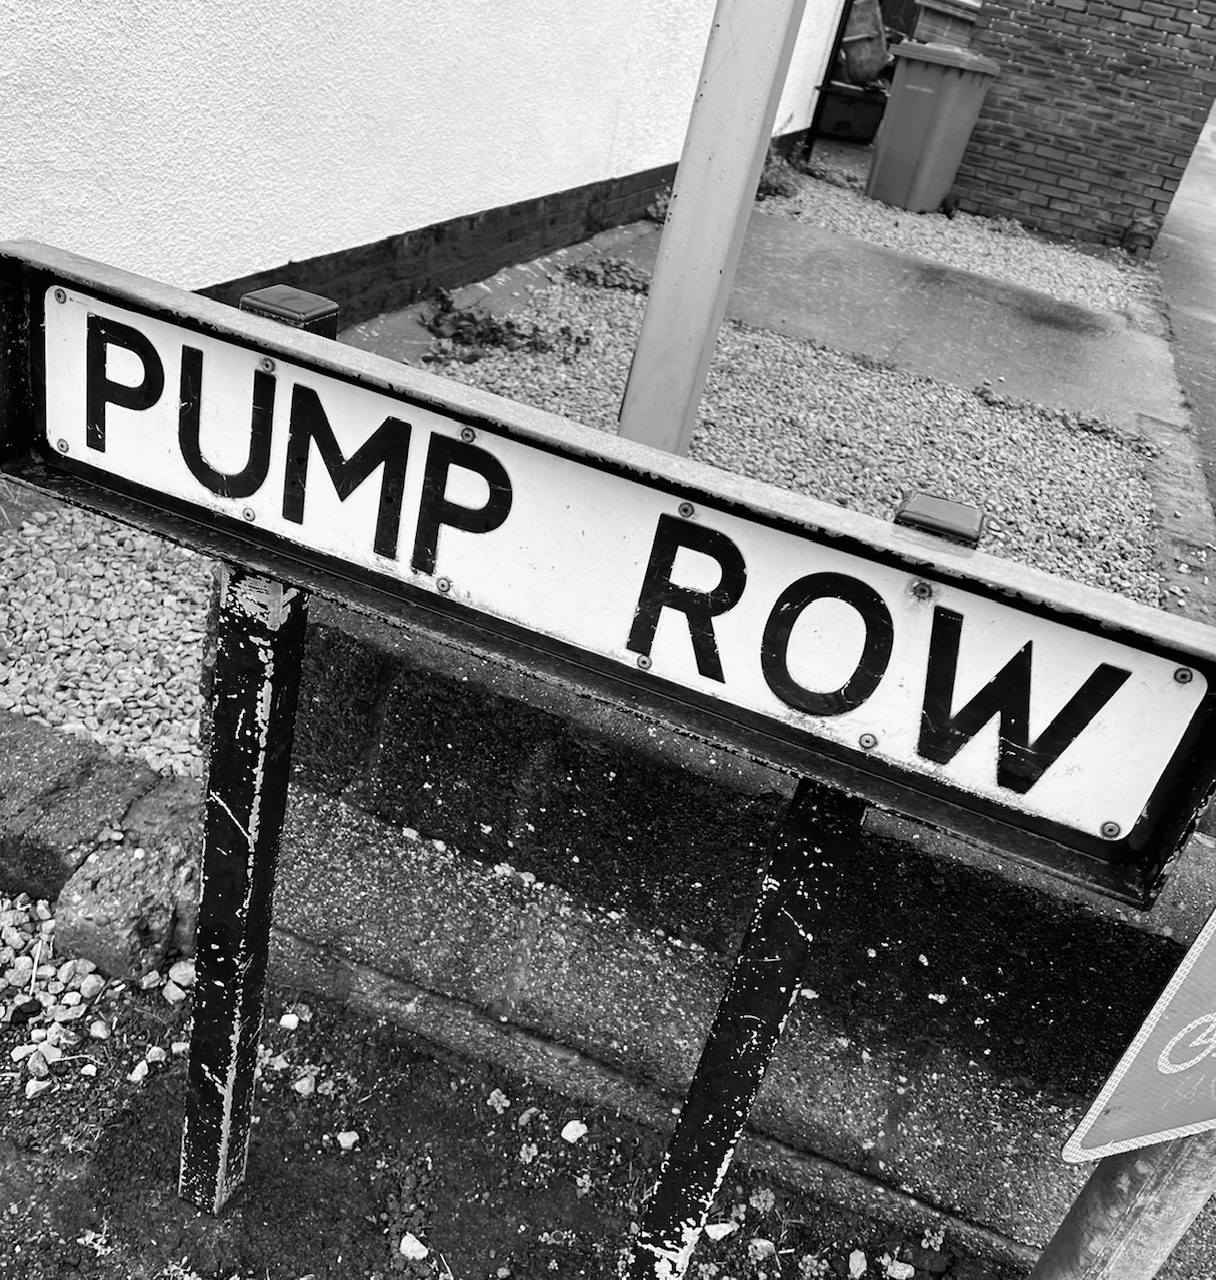 Pump Row - Browns Leaflets